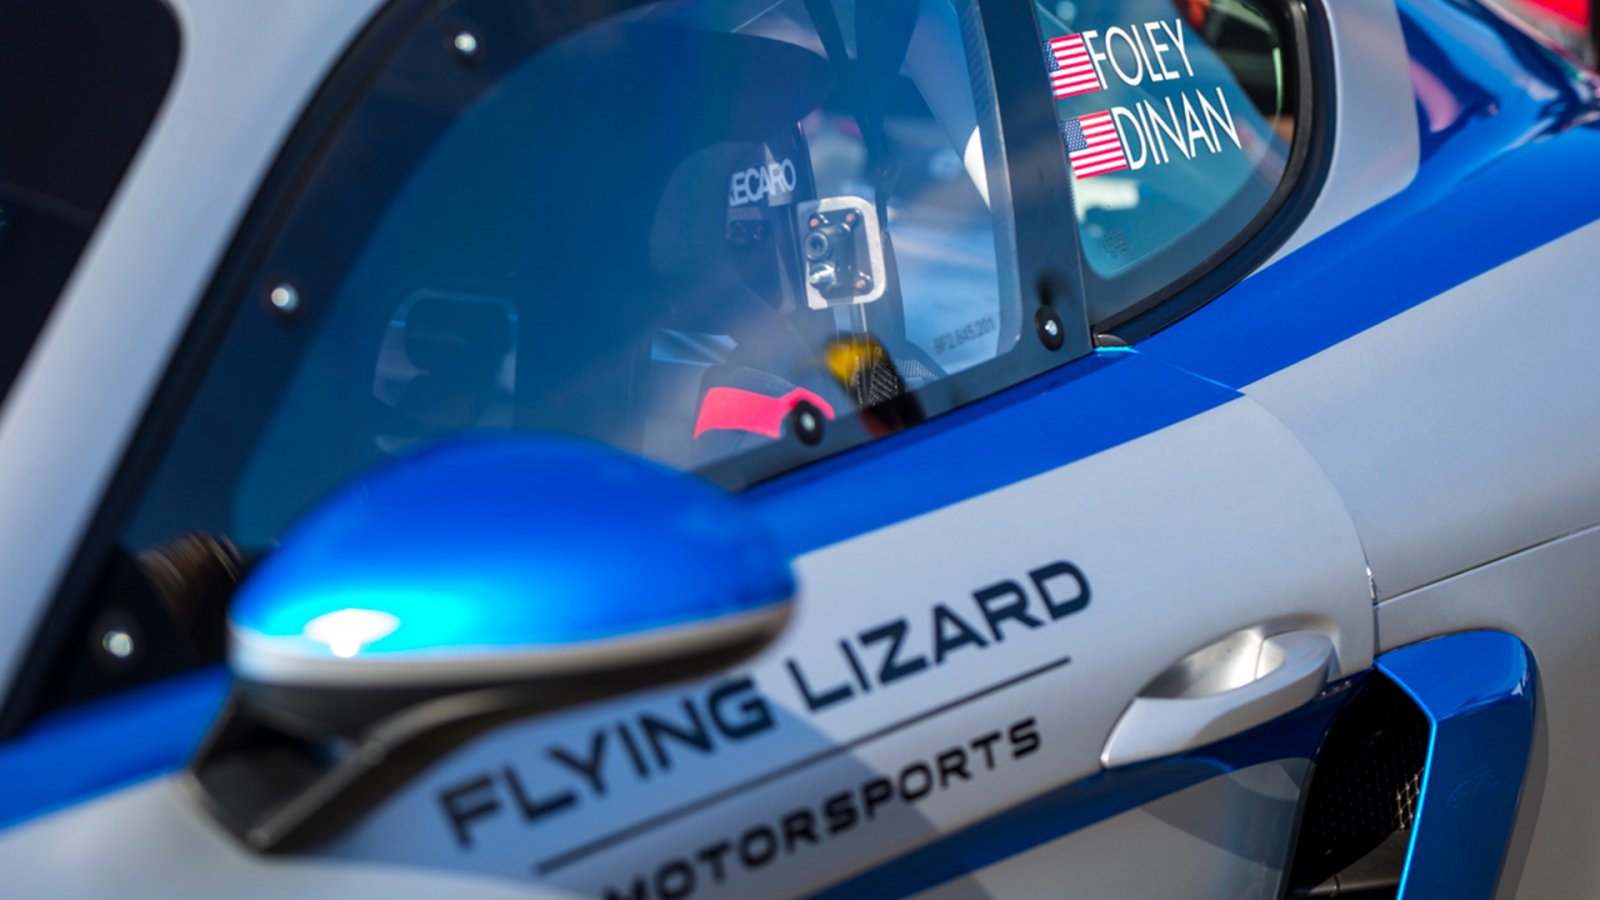 Event Preview: Flying Lizard Motorsports at Watkins Glen International